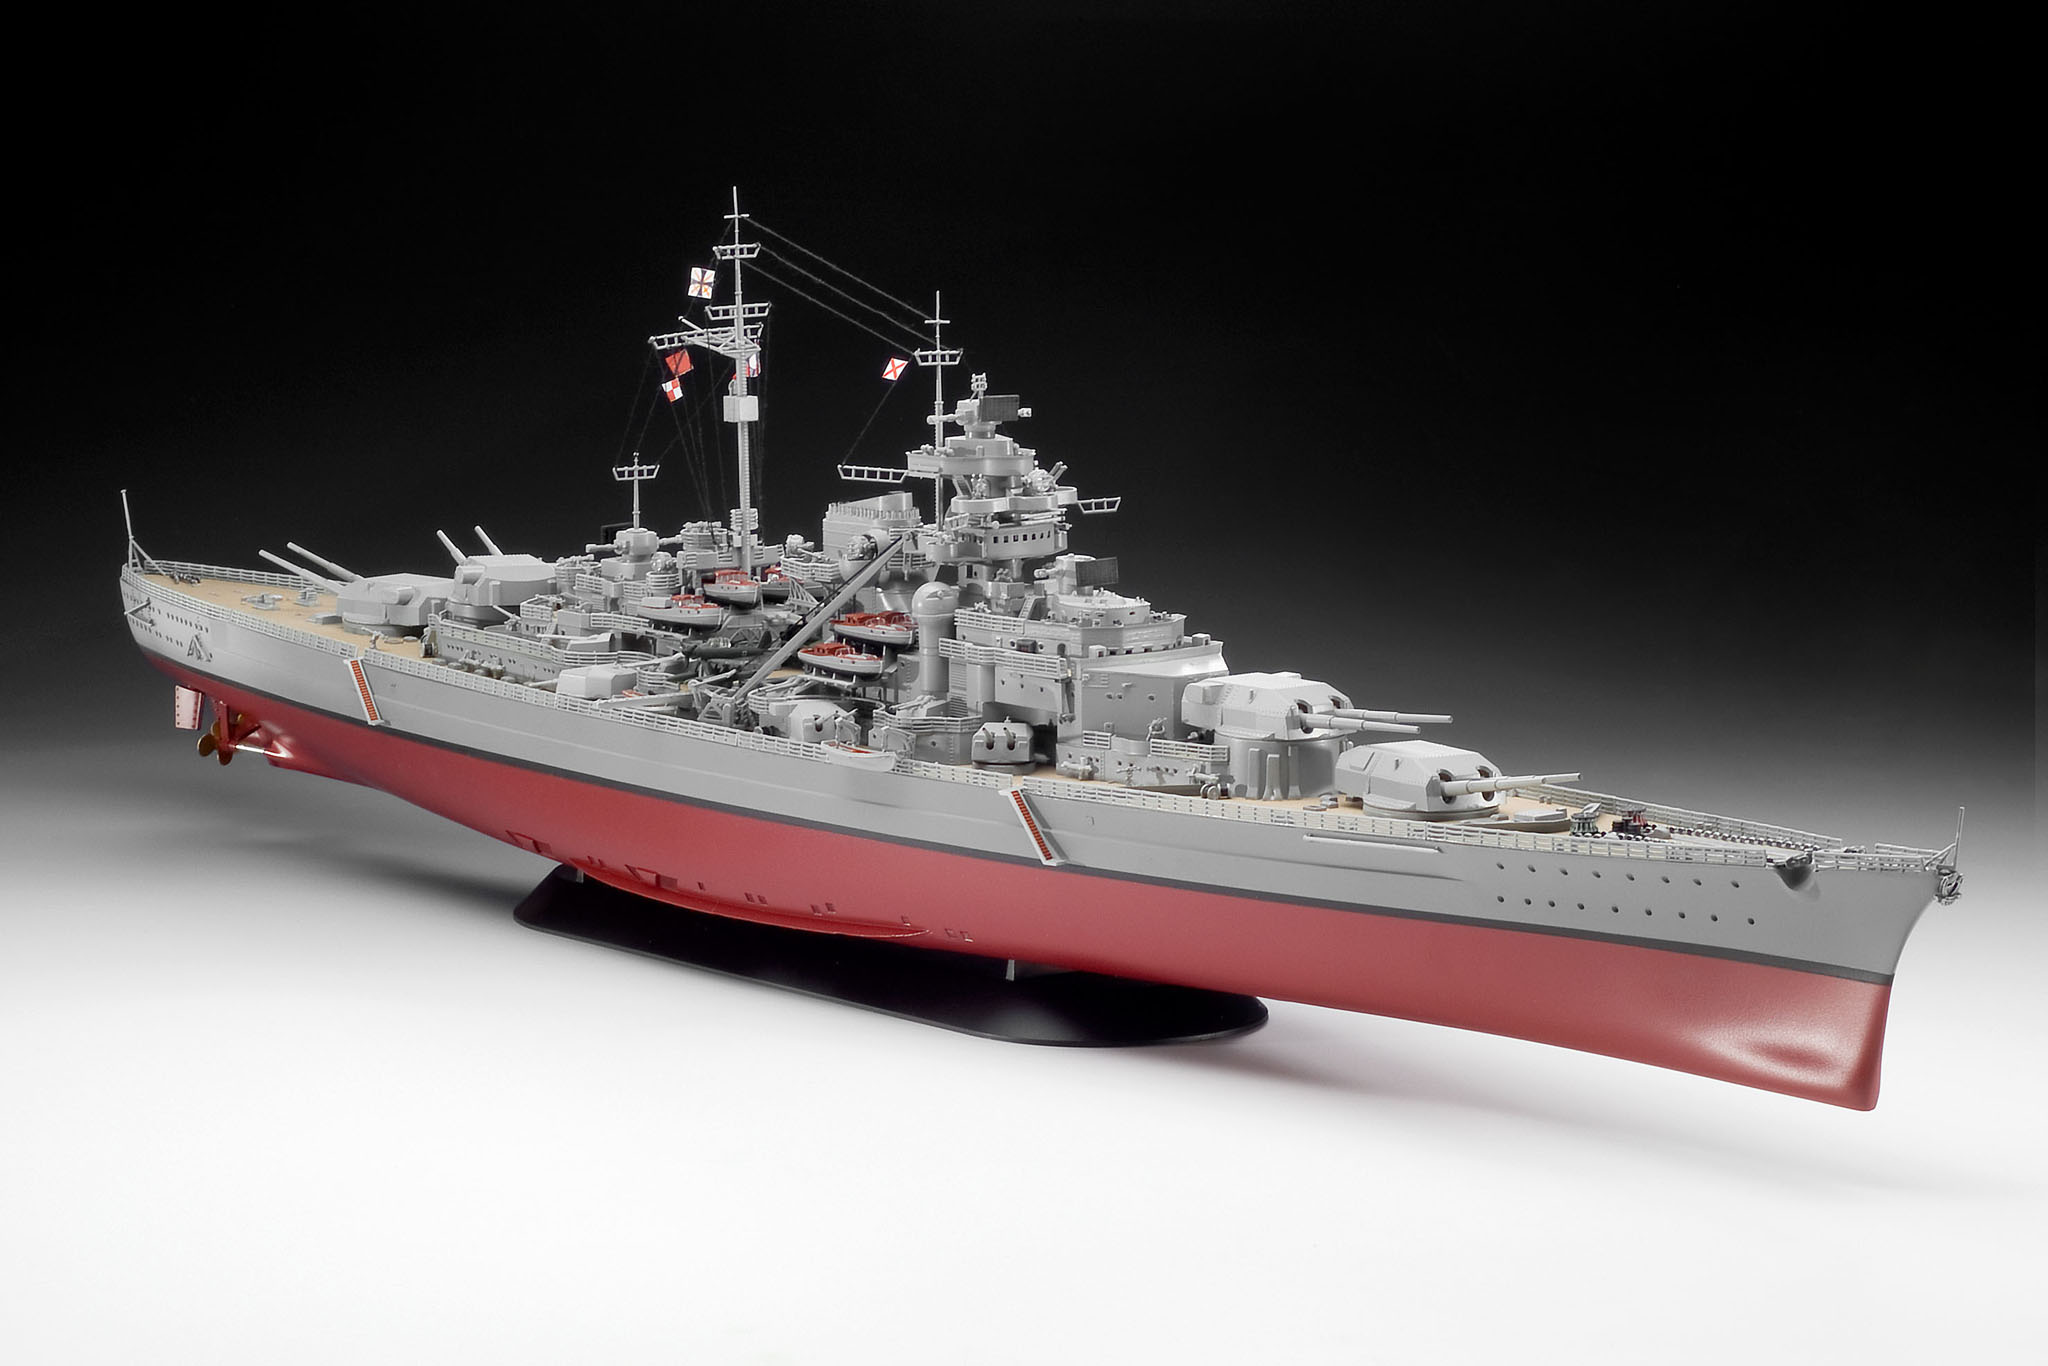 Battleship Bismarck - Bismarck 1:350